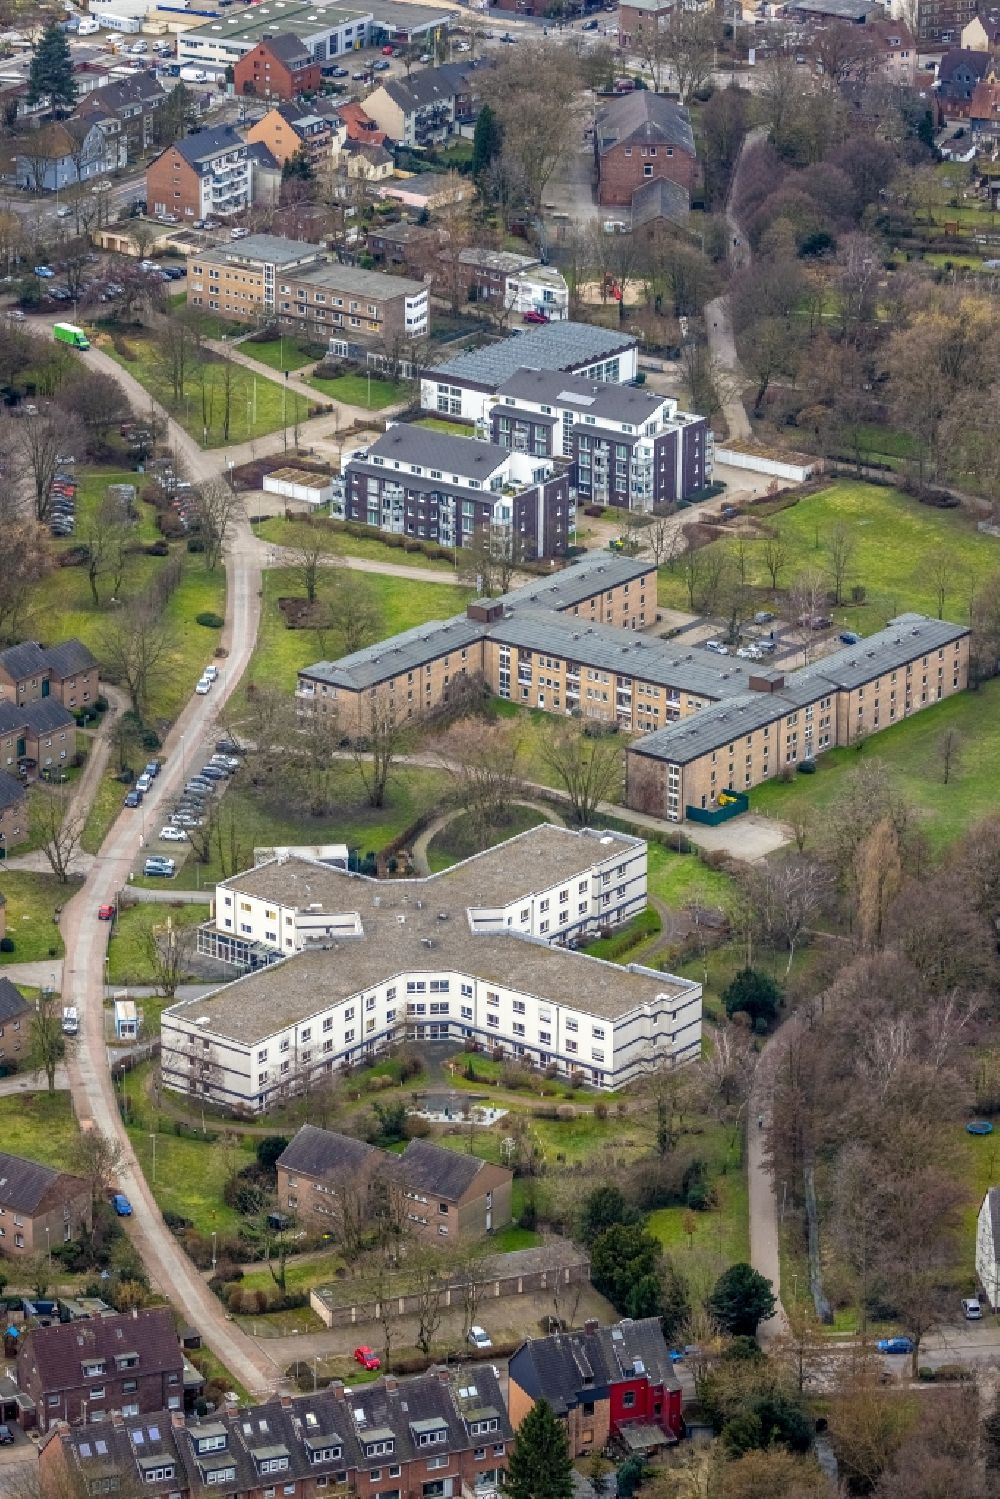 Aerial photograph Oberhausen - Building of the nursing home - Senior residence of ASO retirement facilities of Oberhausen gGmbH in Oberhausen at Ruhrgebiet in North Rhine-Westphalia